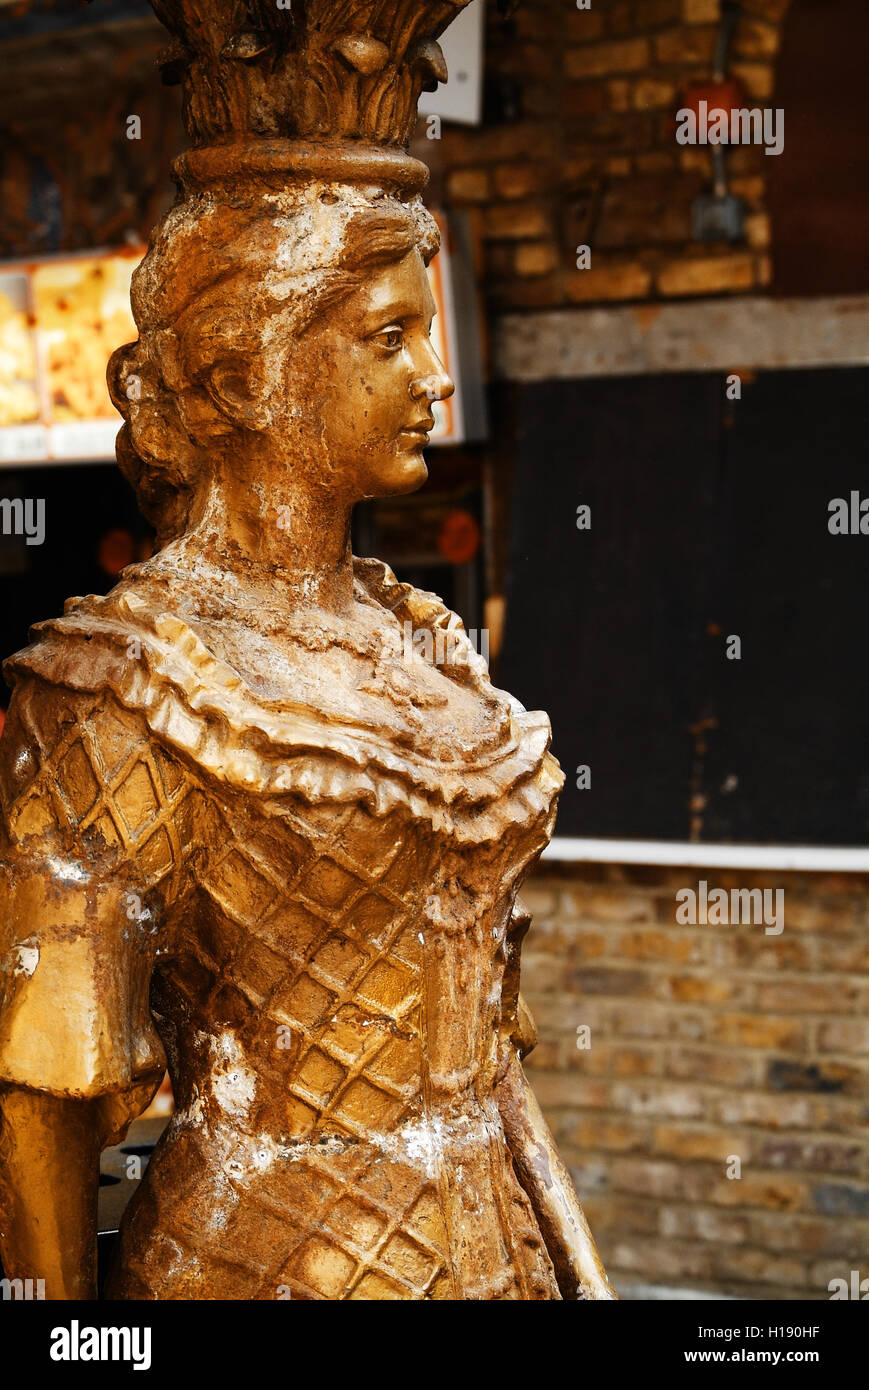 golden column shaped like a lady, Camden Market, London, UK Stock Photo